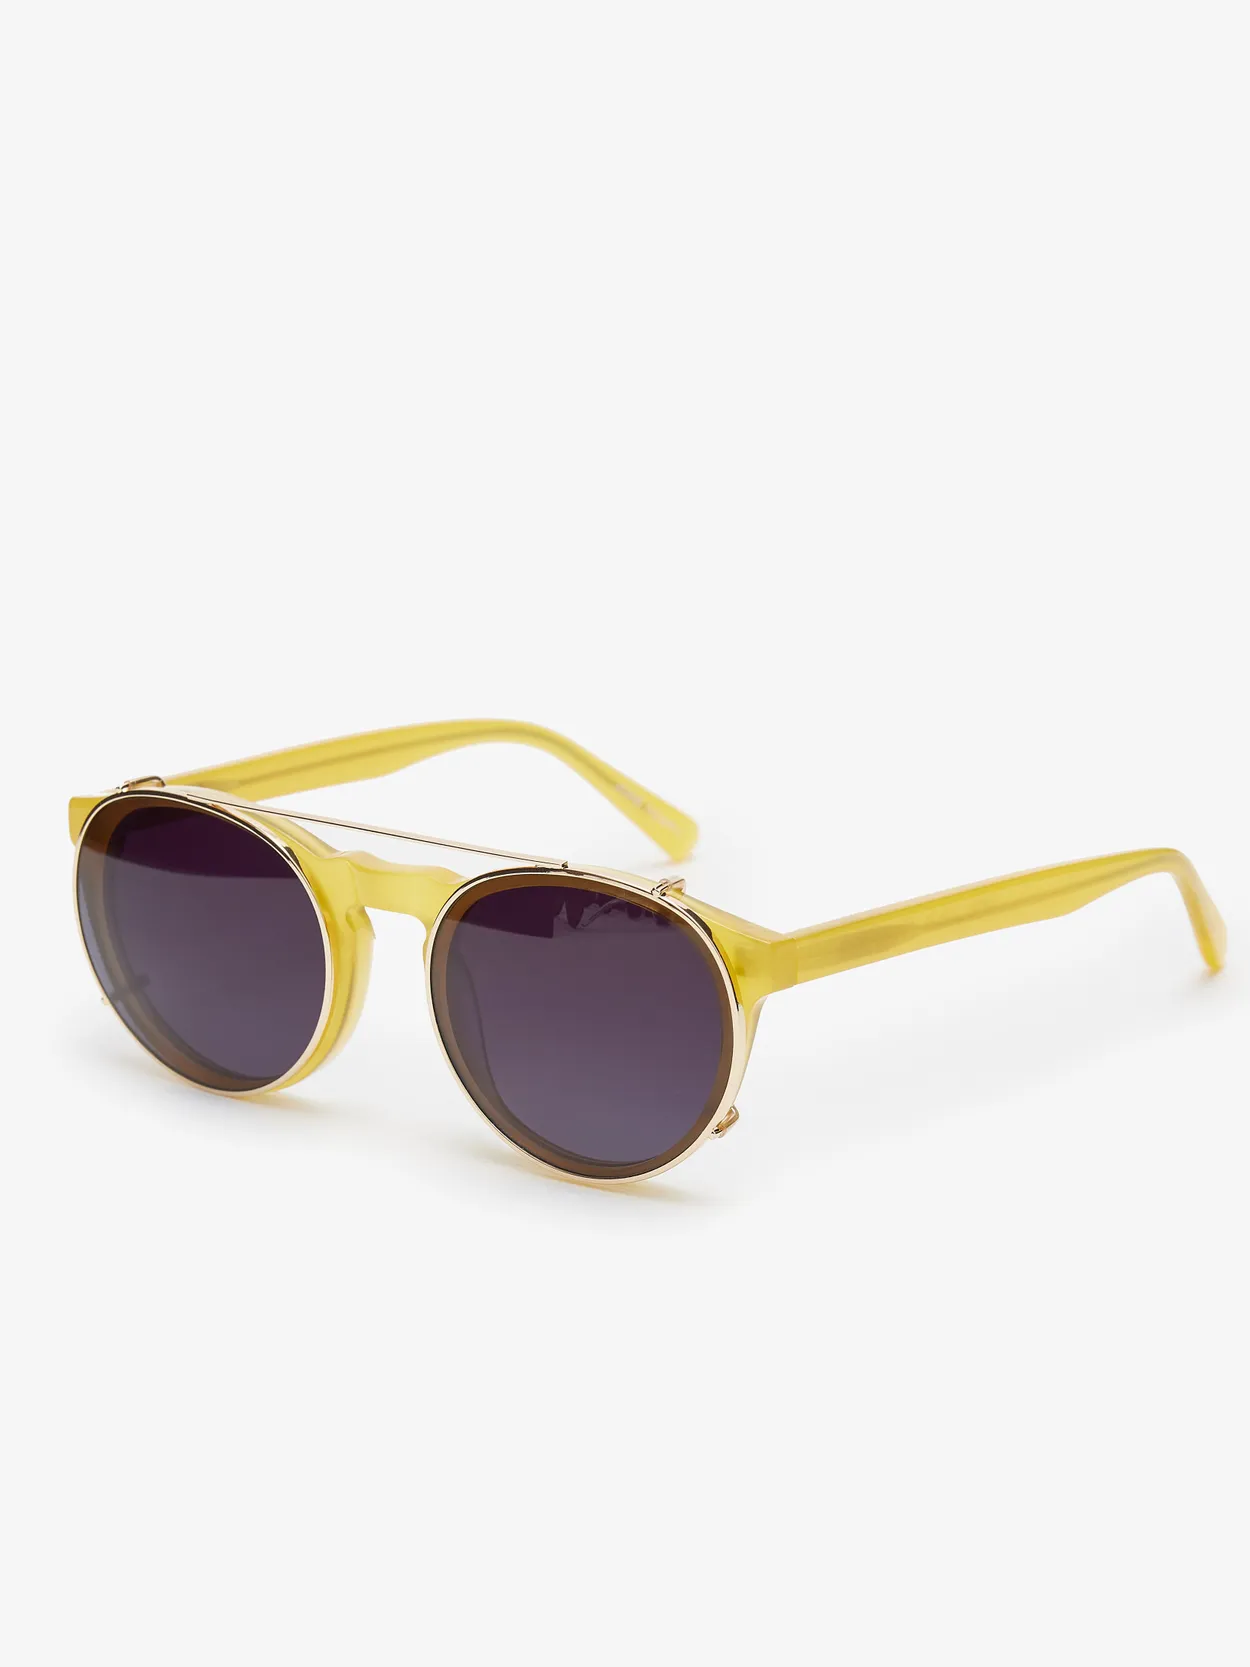 Sunglasses Mykonos, Gold clip-on